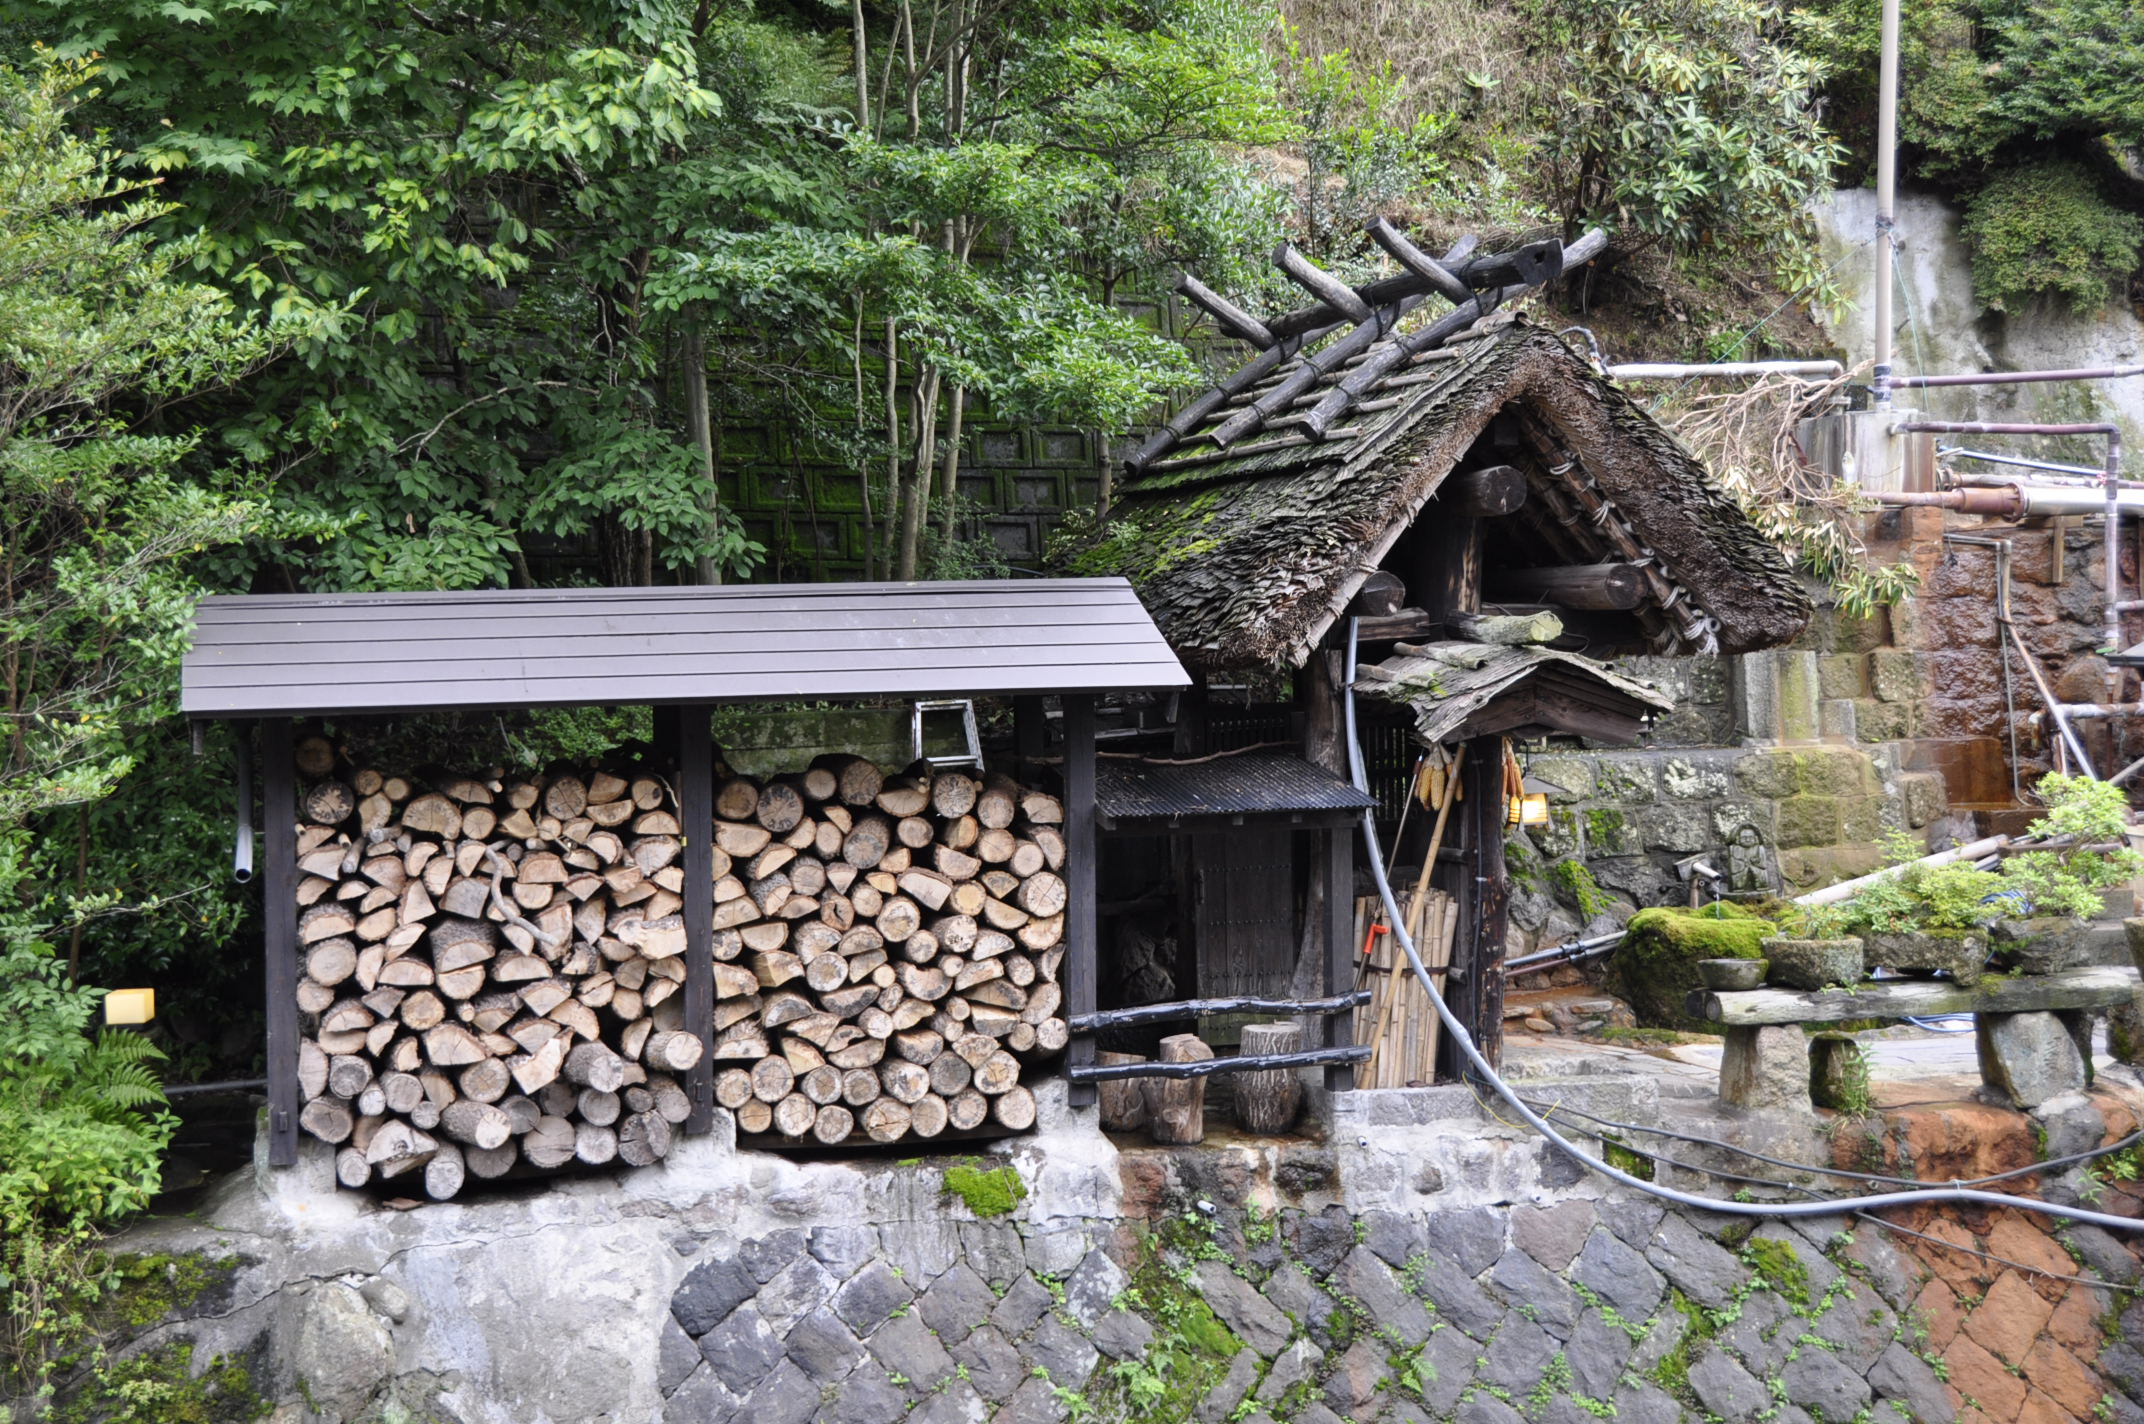 The best hot spring resort in Japan, a nice farewell!
熊本県・黒川温泉は今まで行った温泉の中でも一番のお気に入り